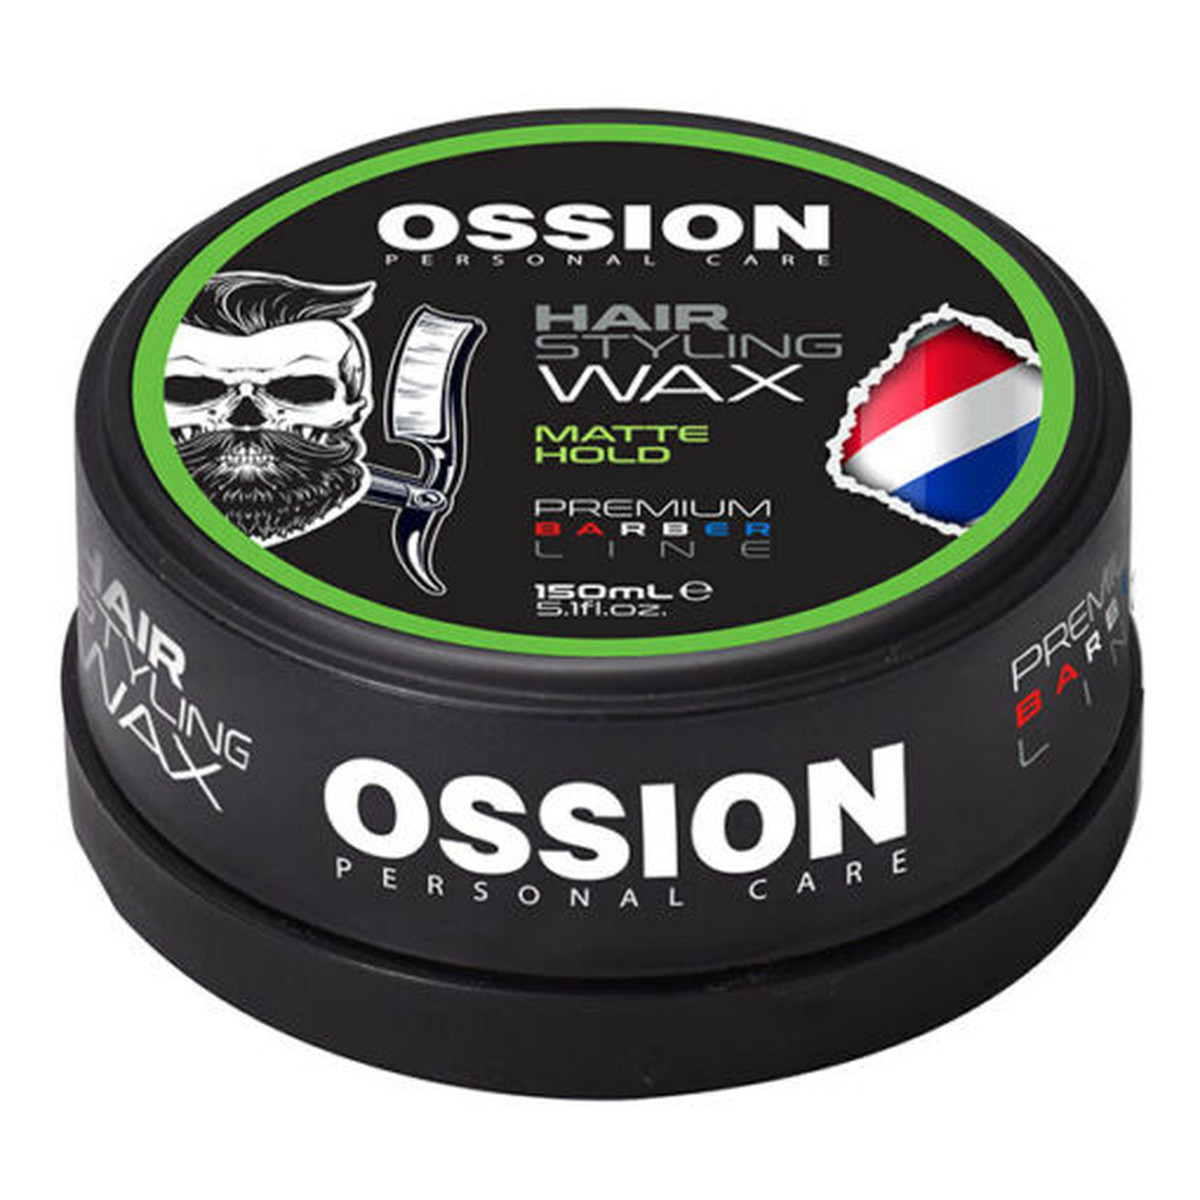 Morfose Ossion personal care hair styling wax wosk do stylizacji włosów matte hold 150ml